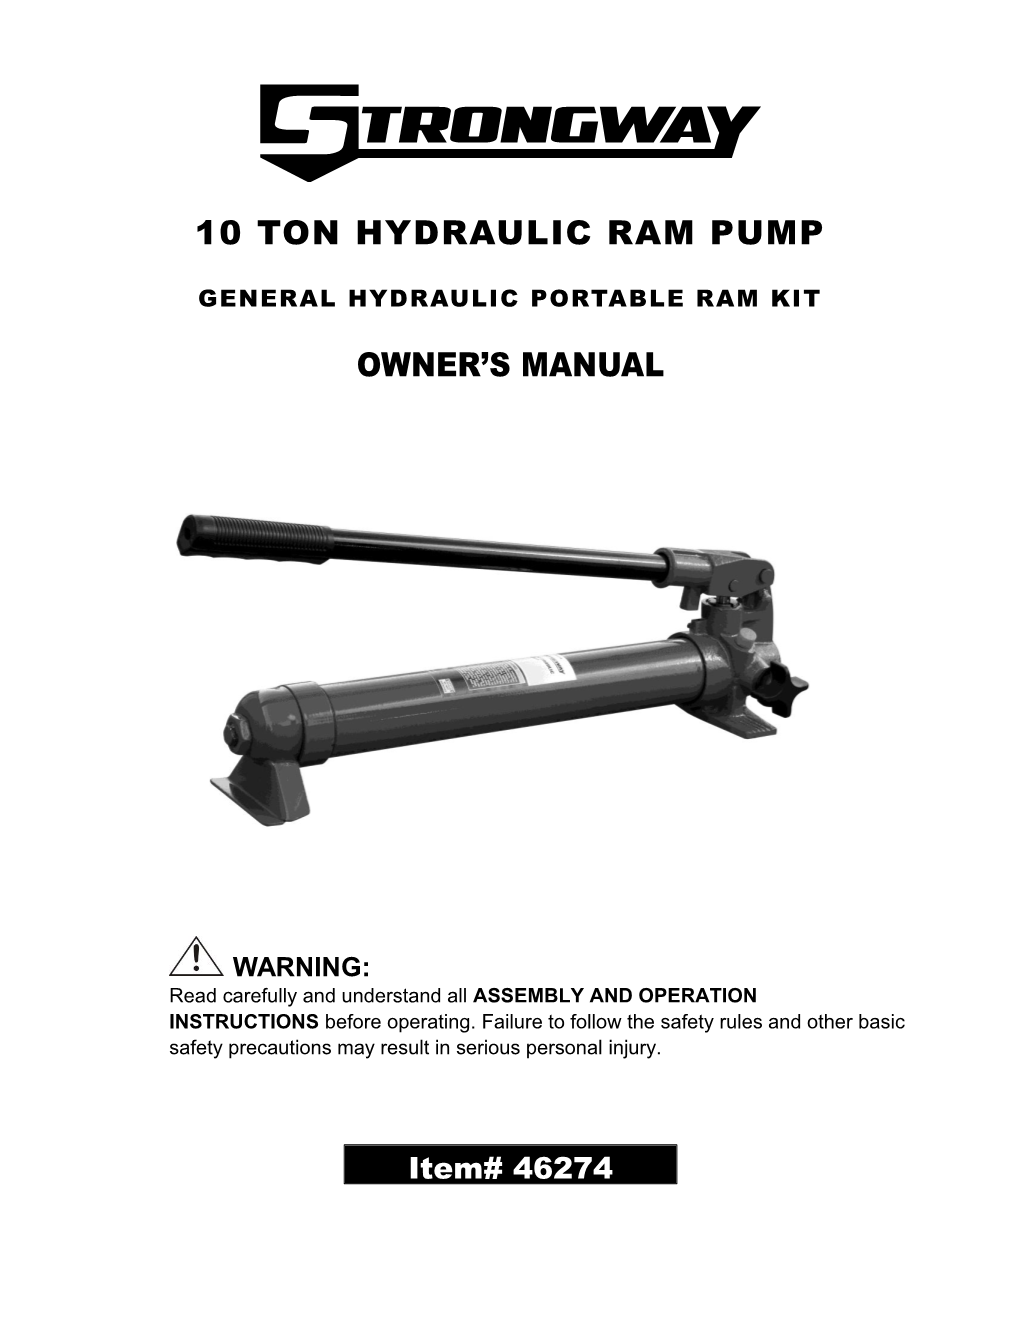 10 Ton Hydraulic Ram Pump Owner's Manual